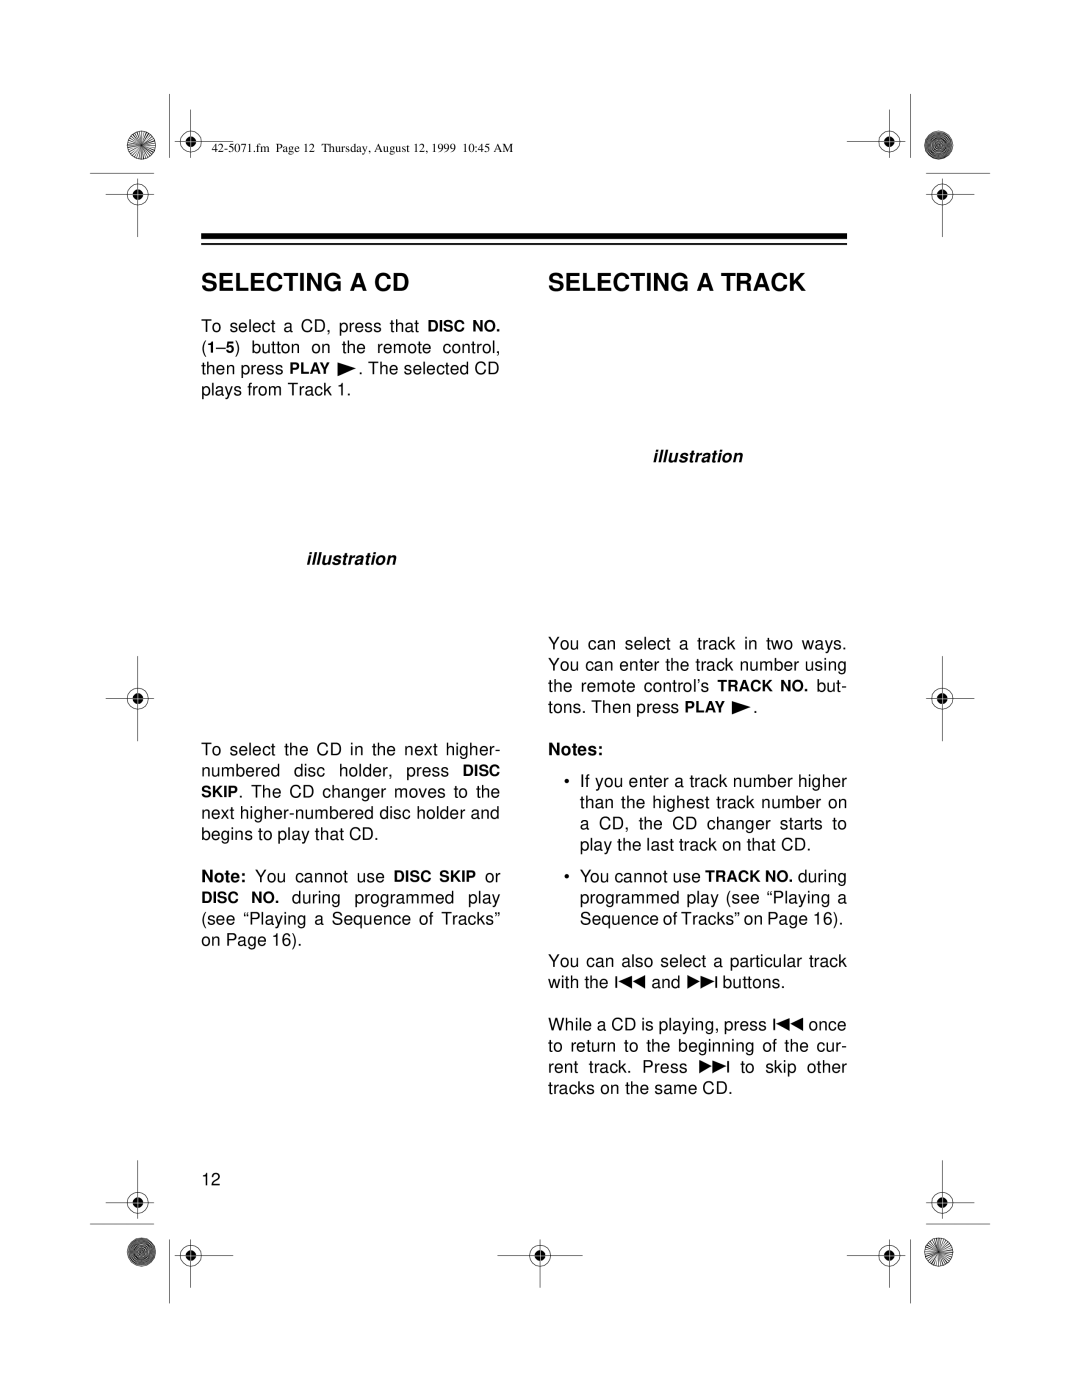 Radio Shack CD-8150 owner manual Selecting A Cd, Selecting A Track, illustration 